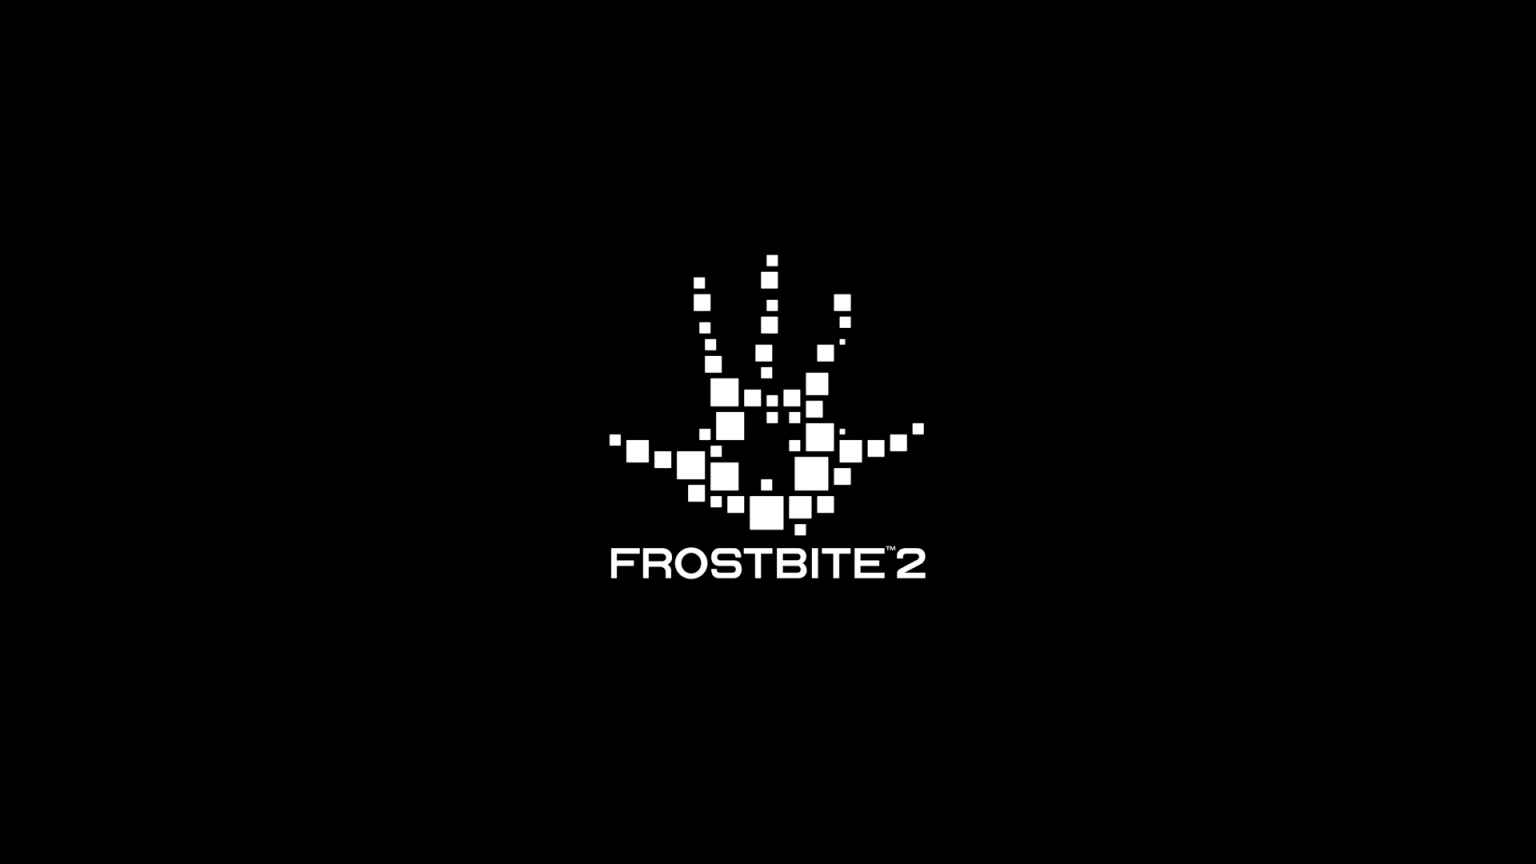 Frostbite 2 for 1536 x 864 HDTV resolution